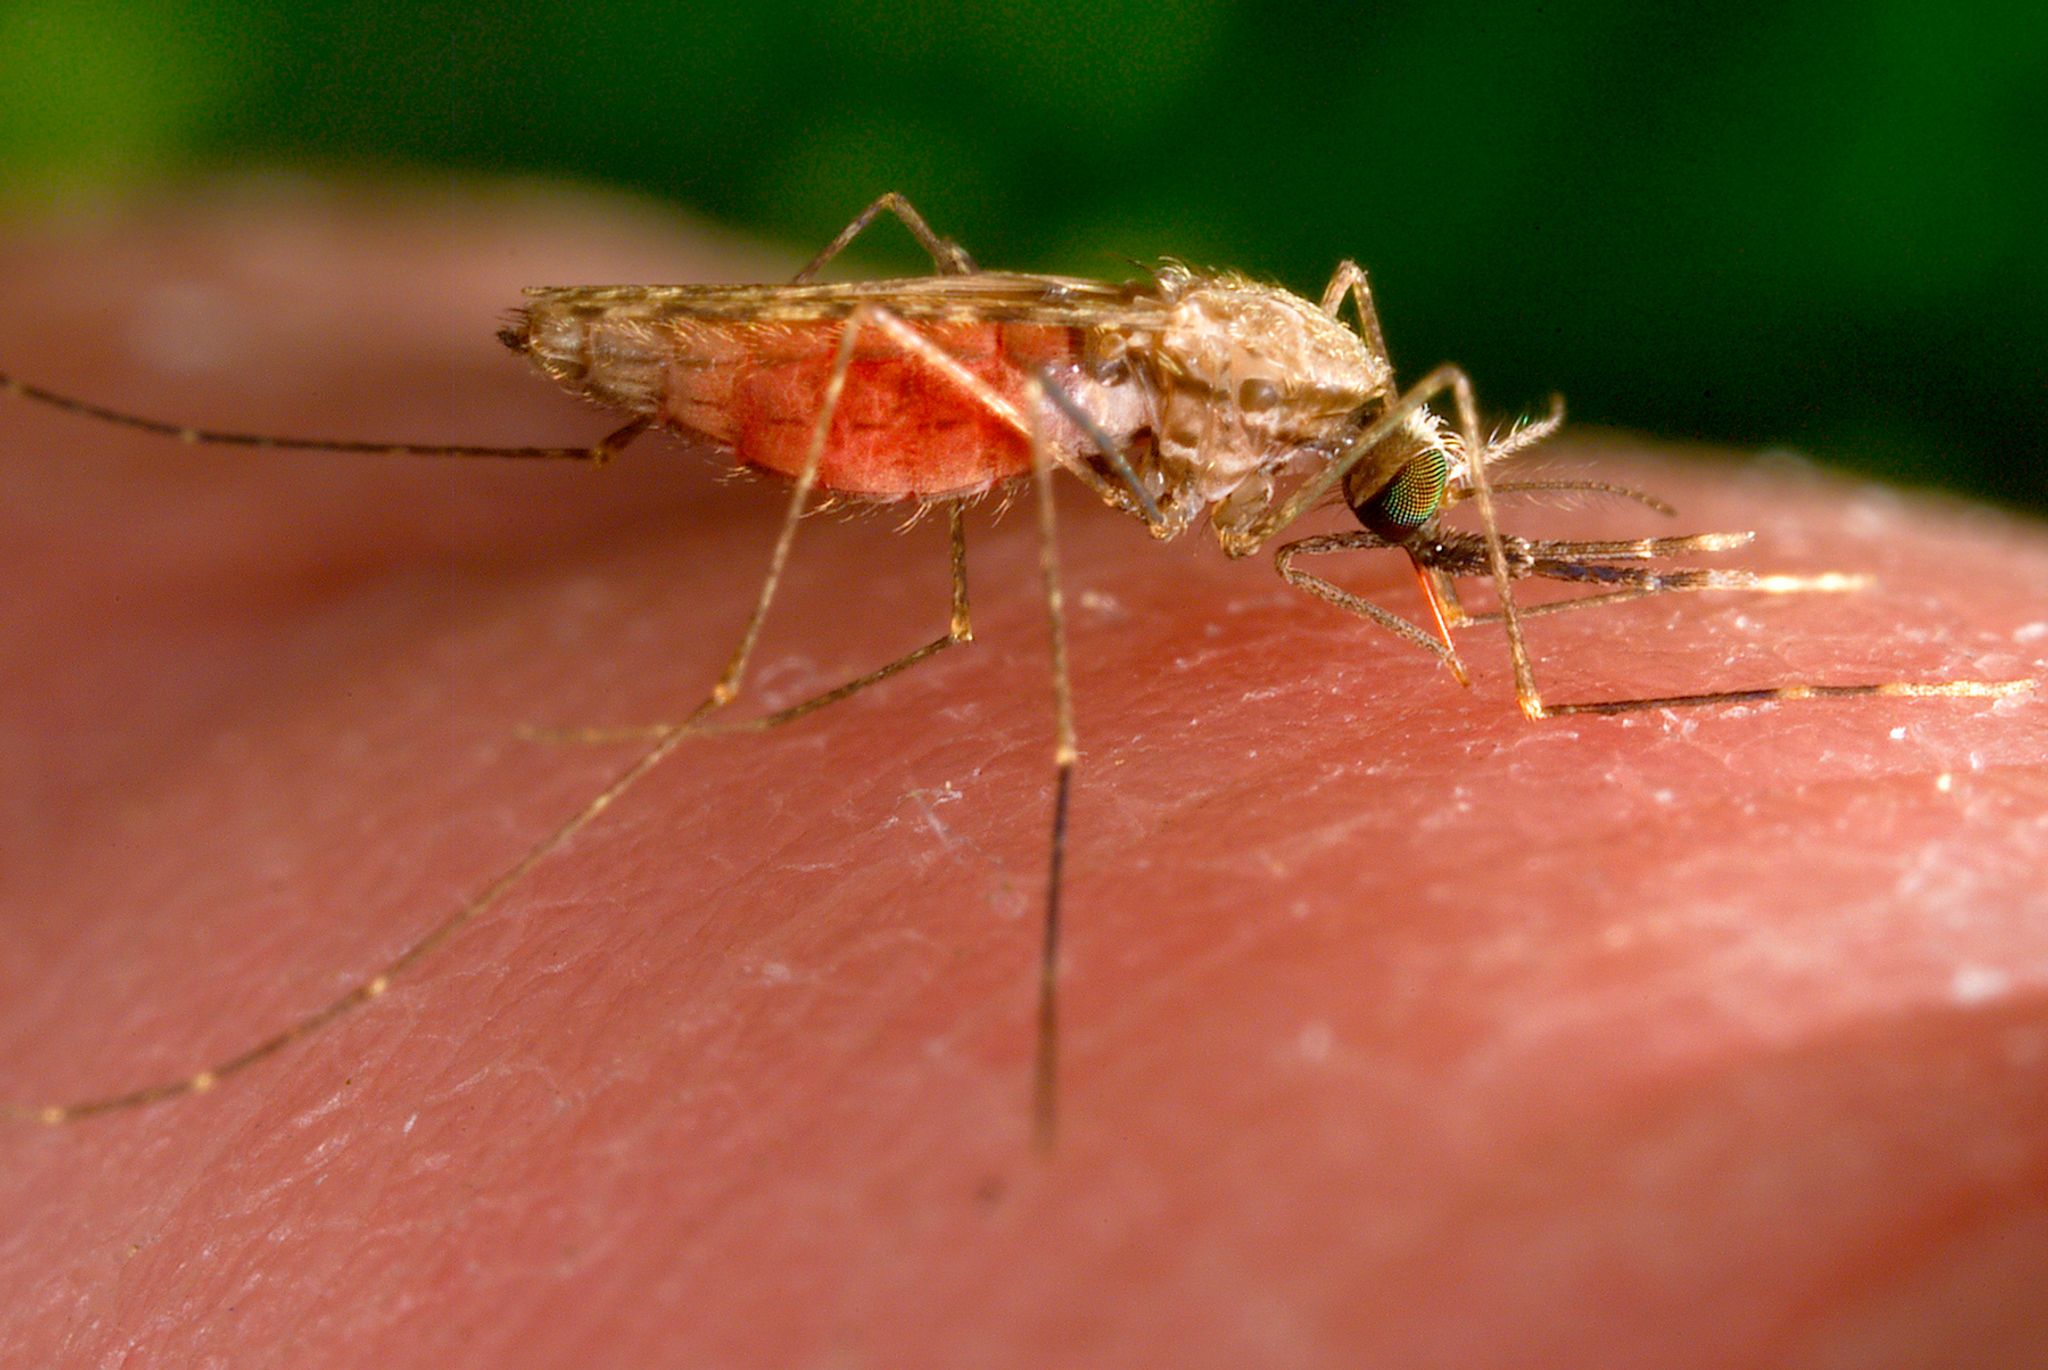 Anopheles-Mücken übertragen Malaria-Erreger.